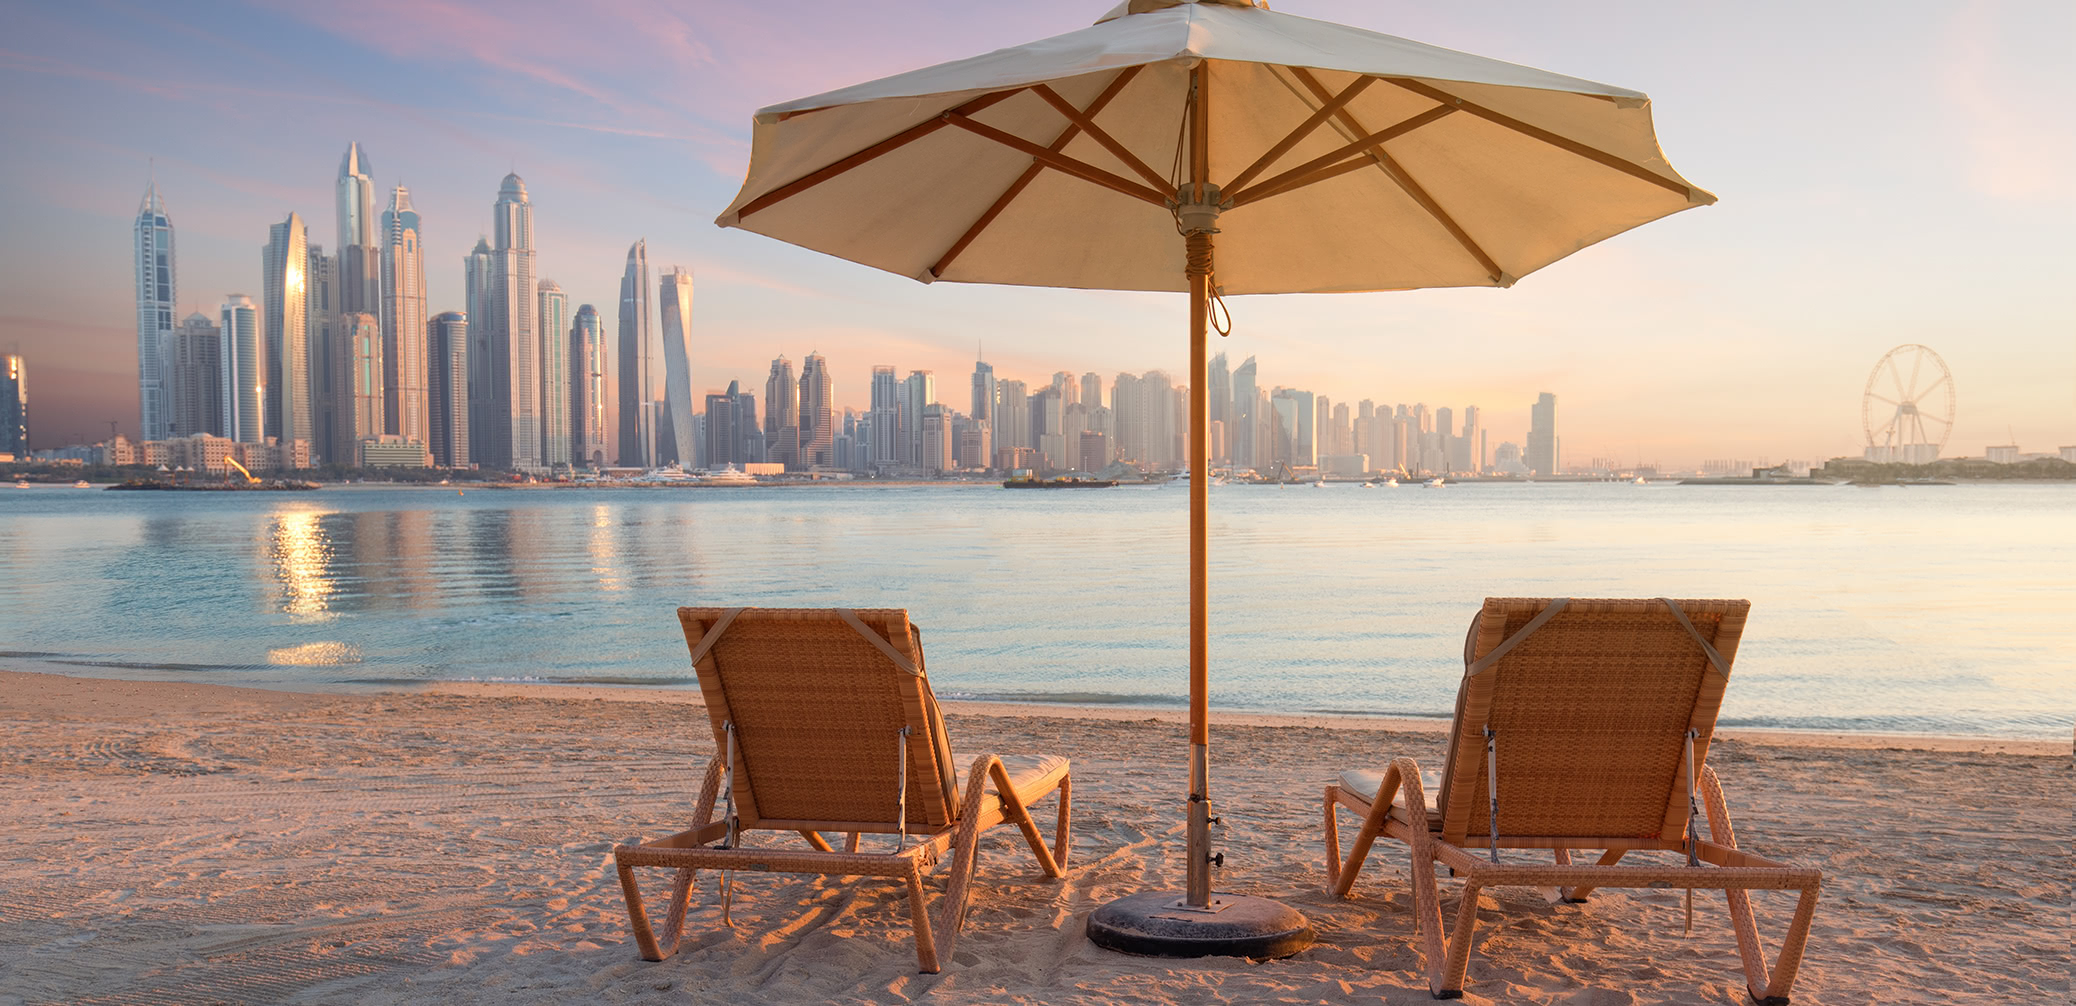 Best Hotel To Book: Four Seasons, Waldorf Astoria Or Ritz-Carlton Dubai?